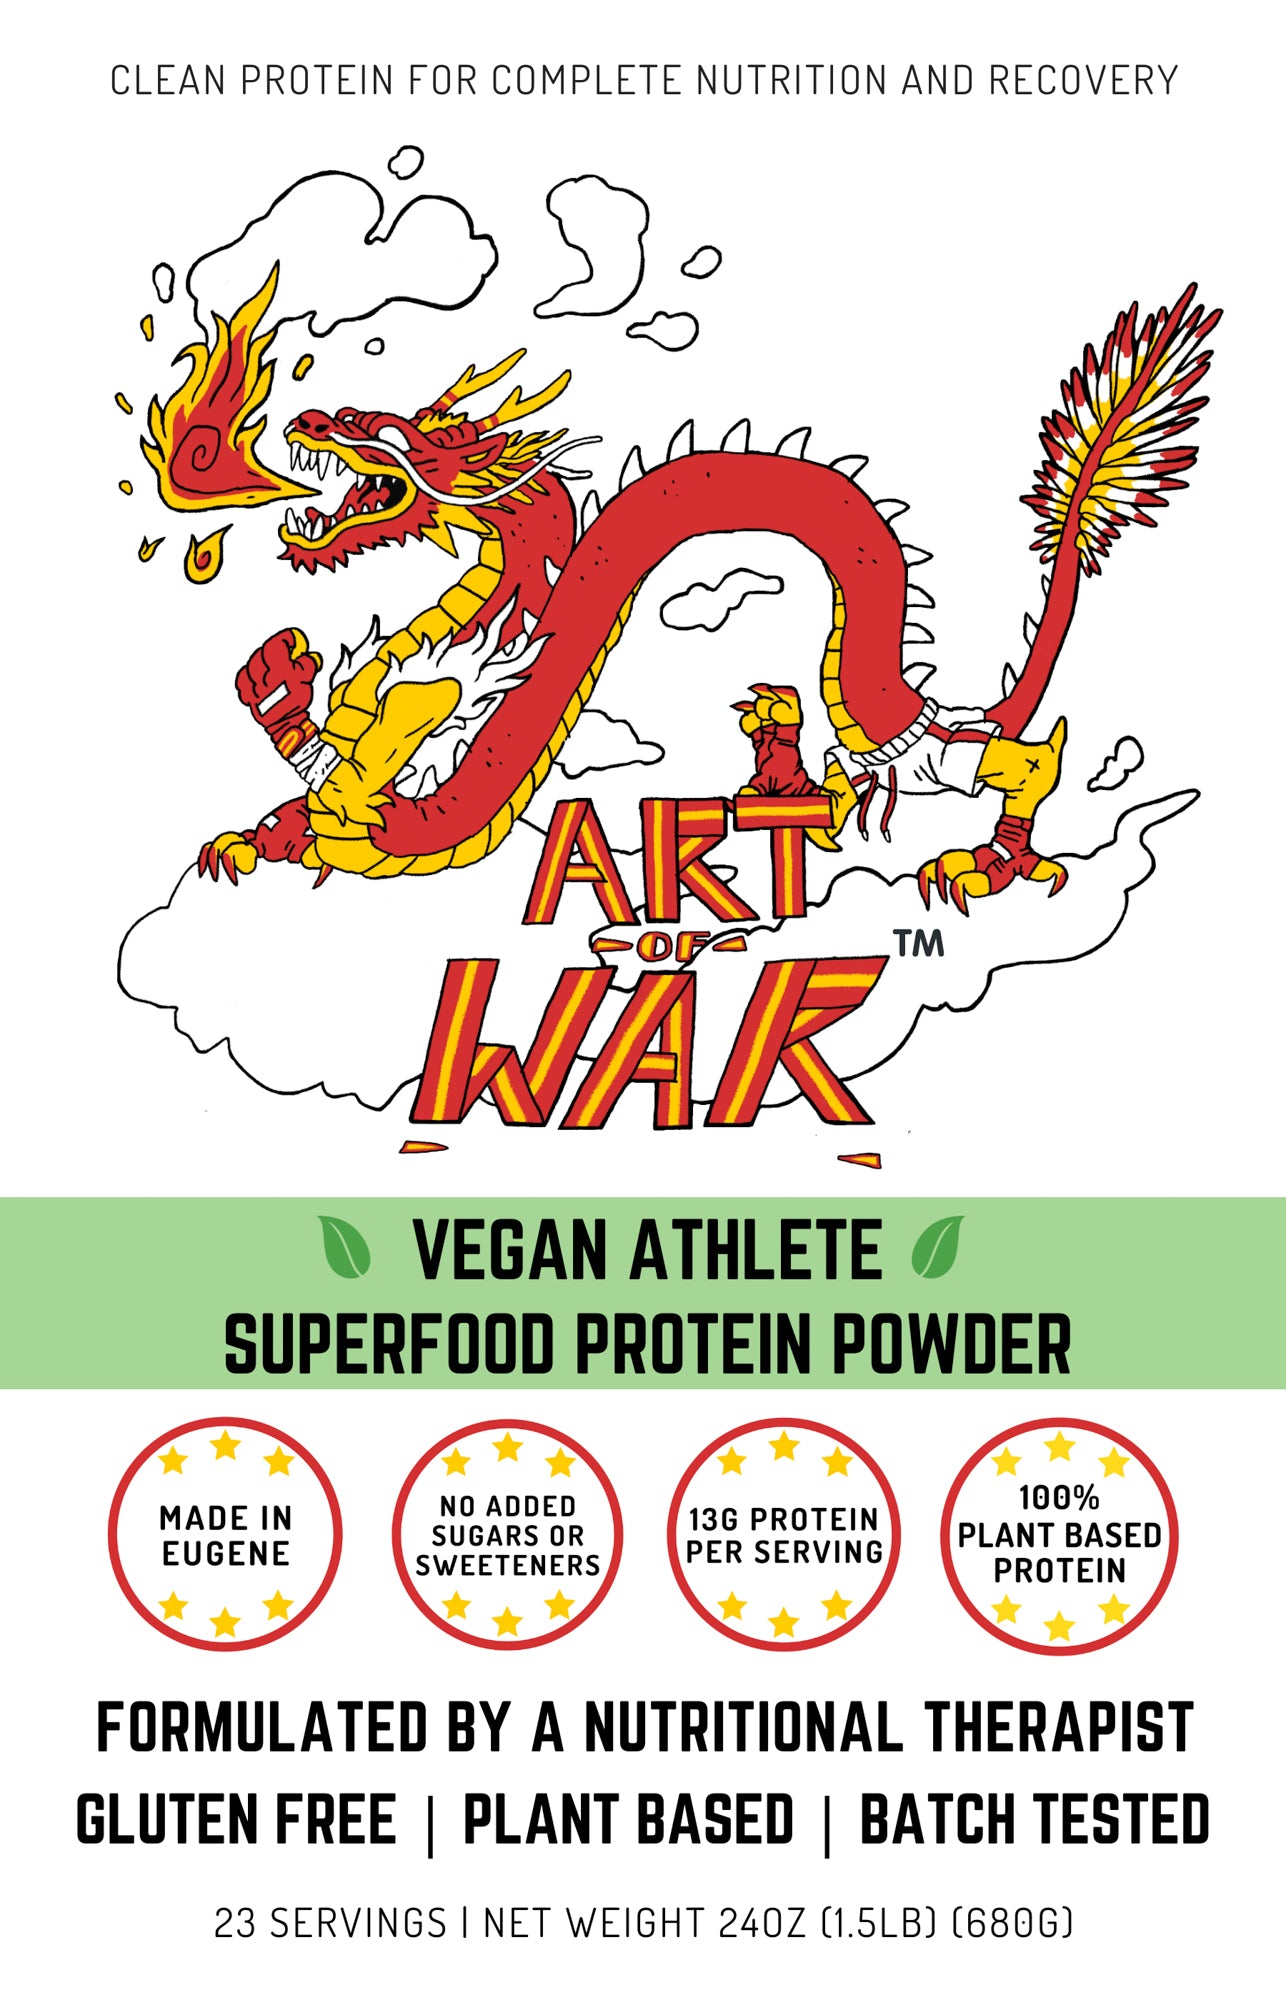 Vegan Athlete - Superfood Protein Powder